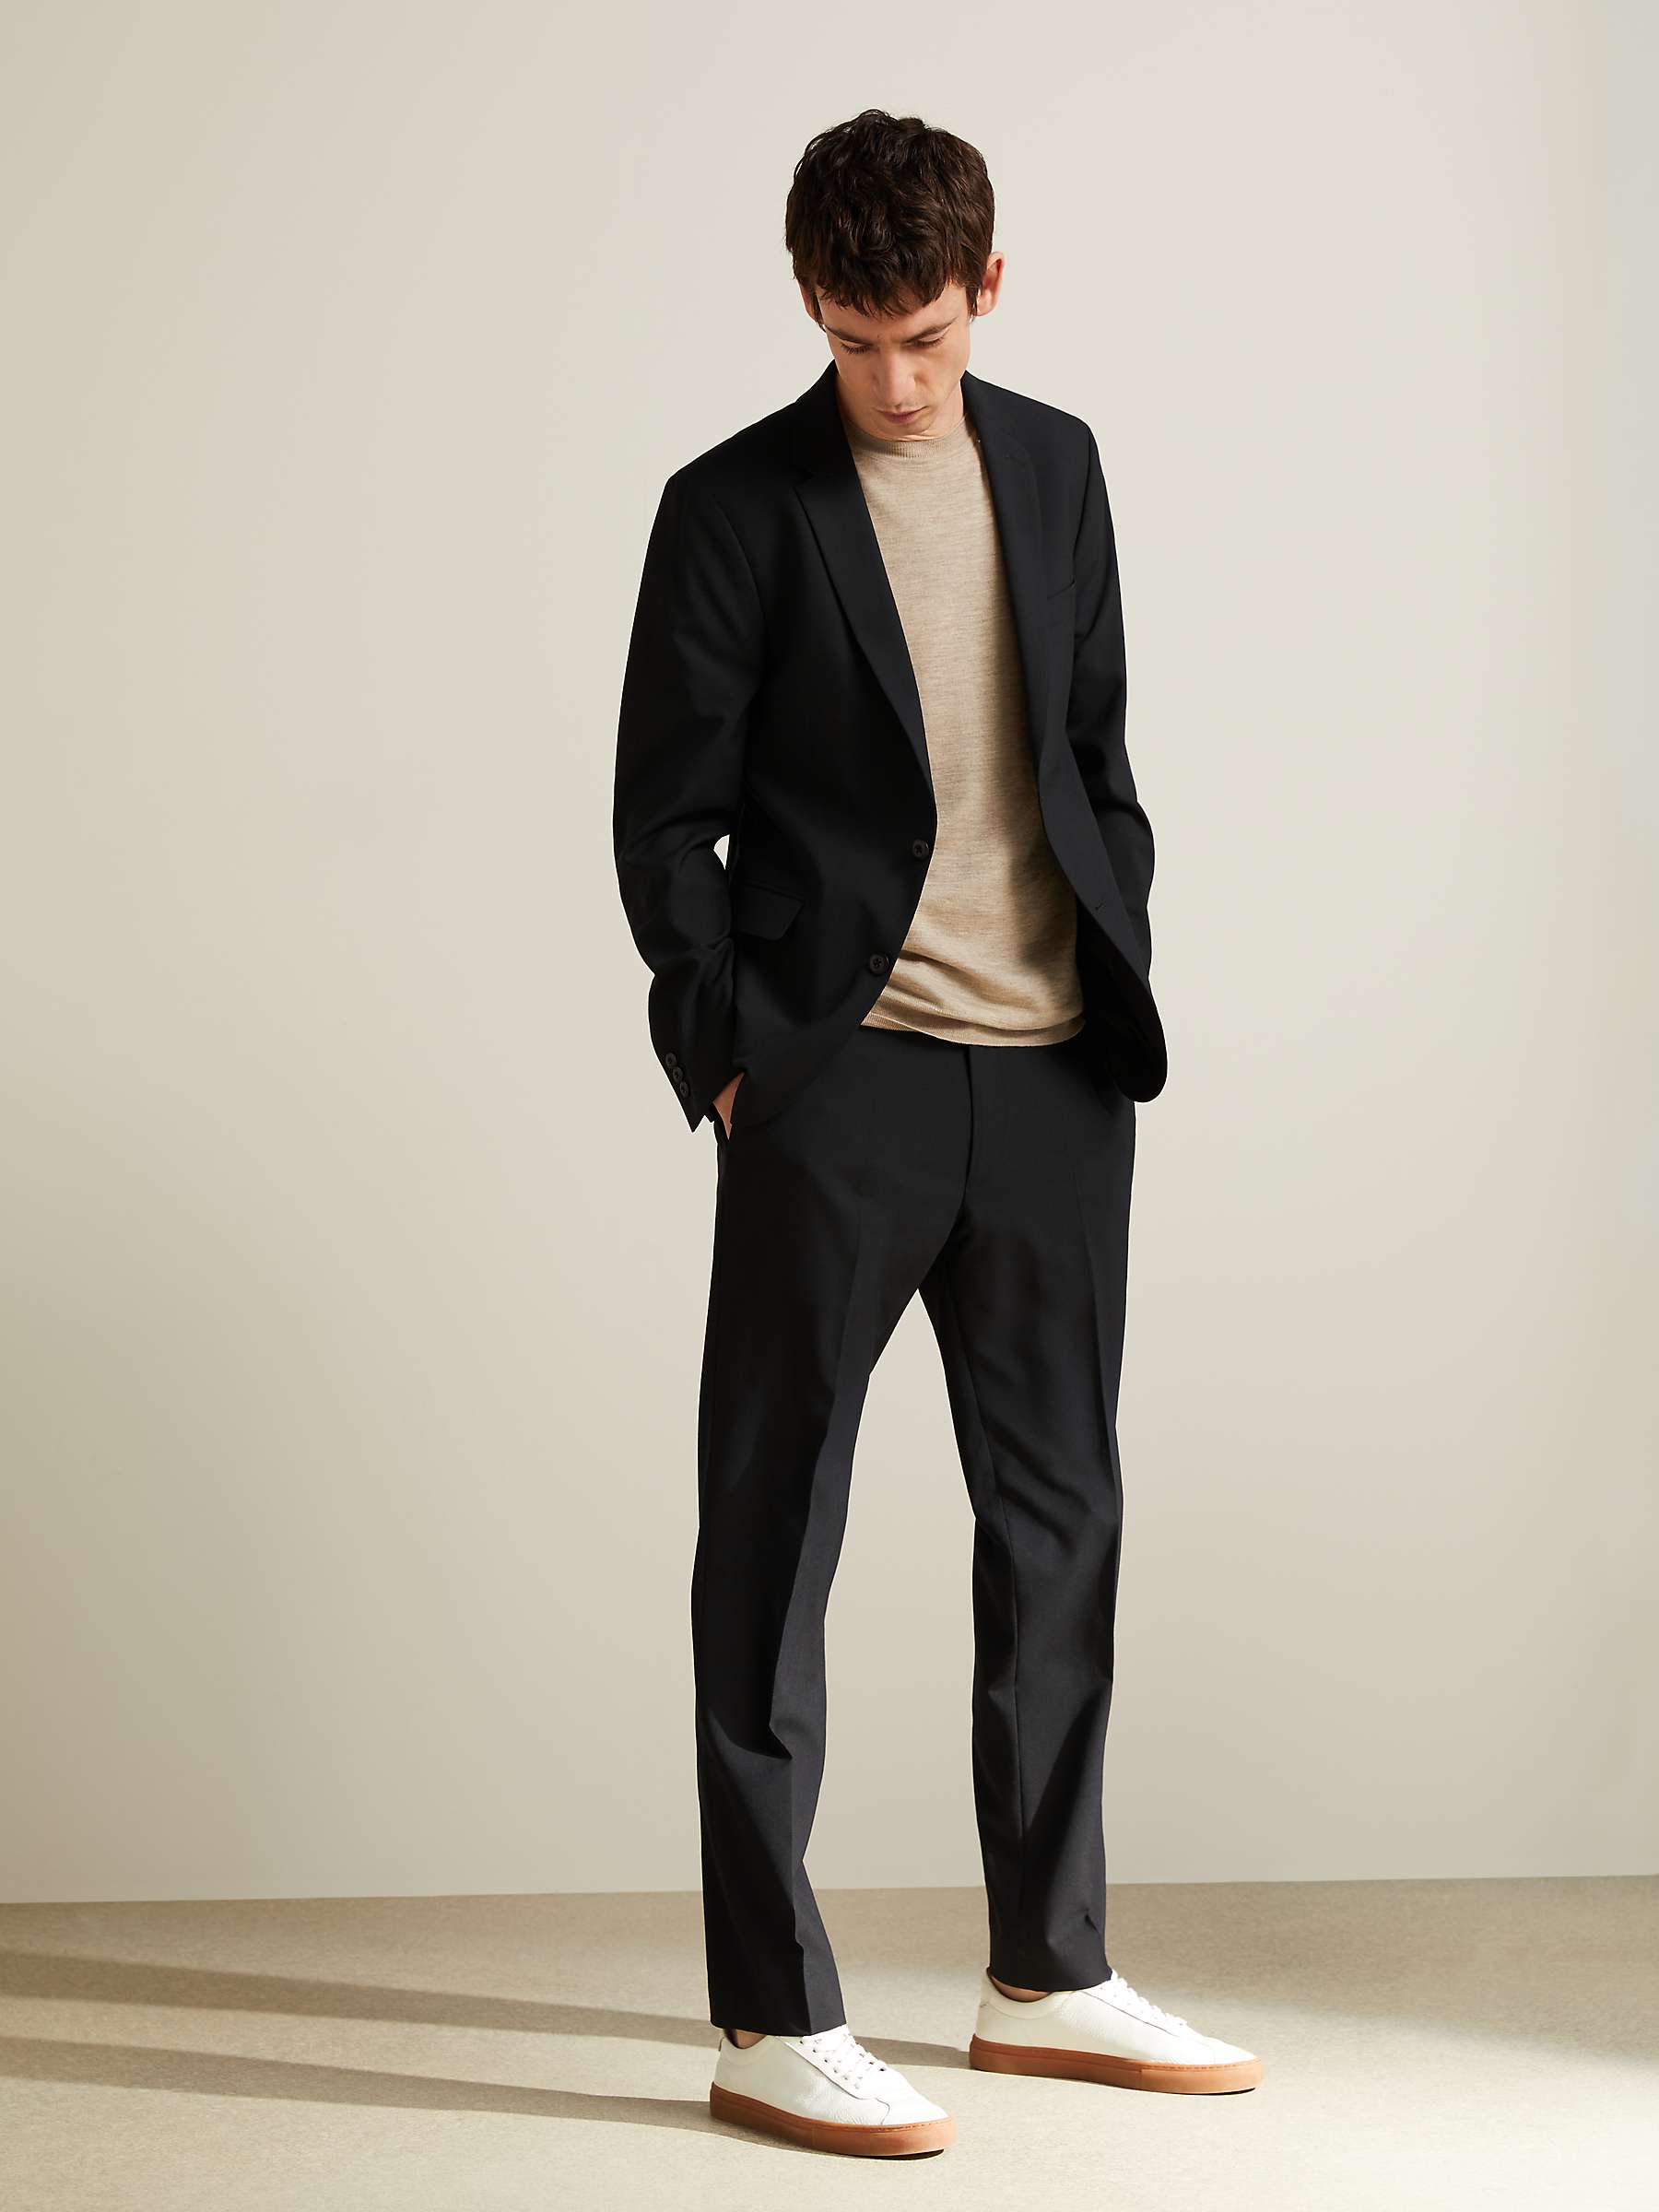 Buy John Lewis Made with Care Slim Fit Suit Jacket, Black Online at johnlewis.com